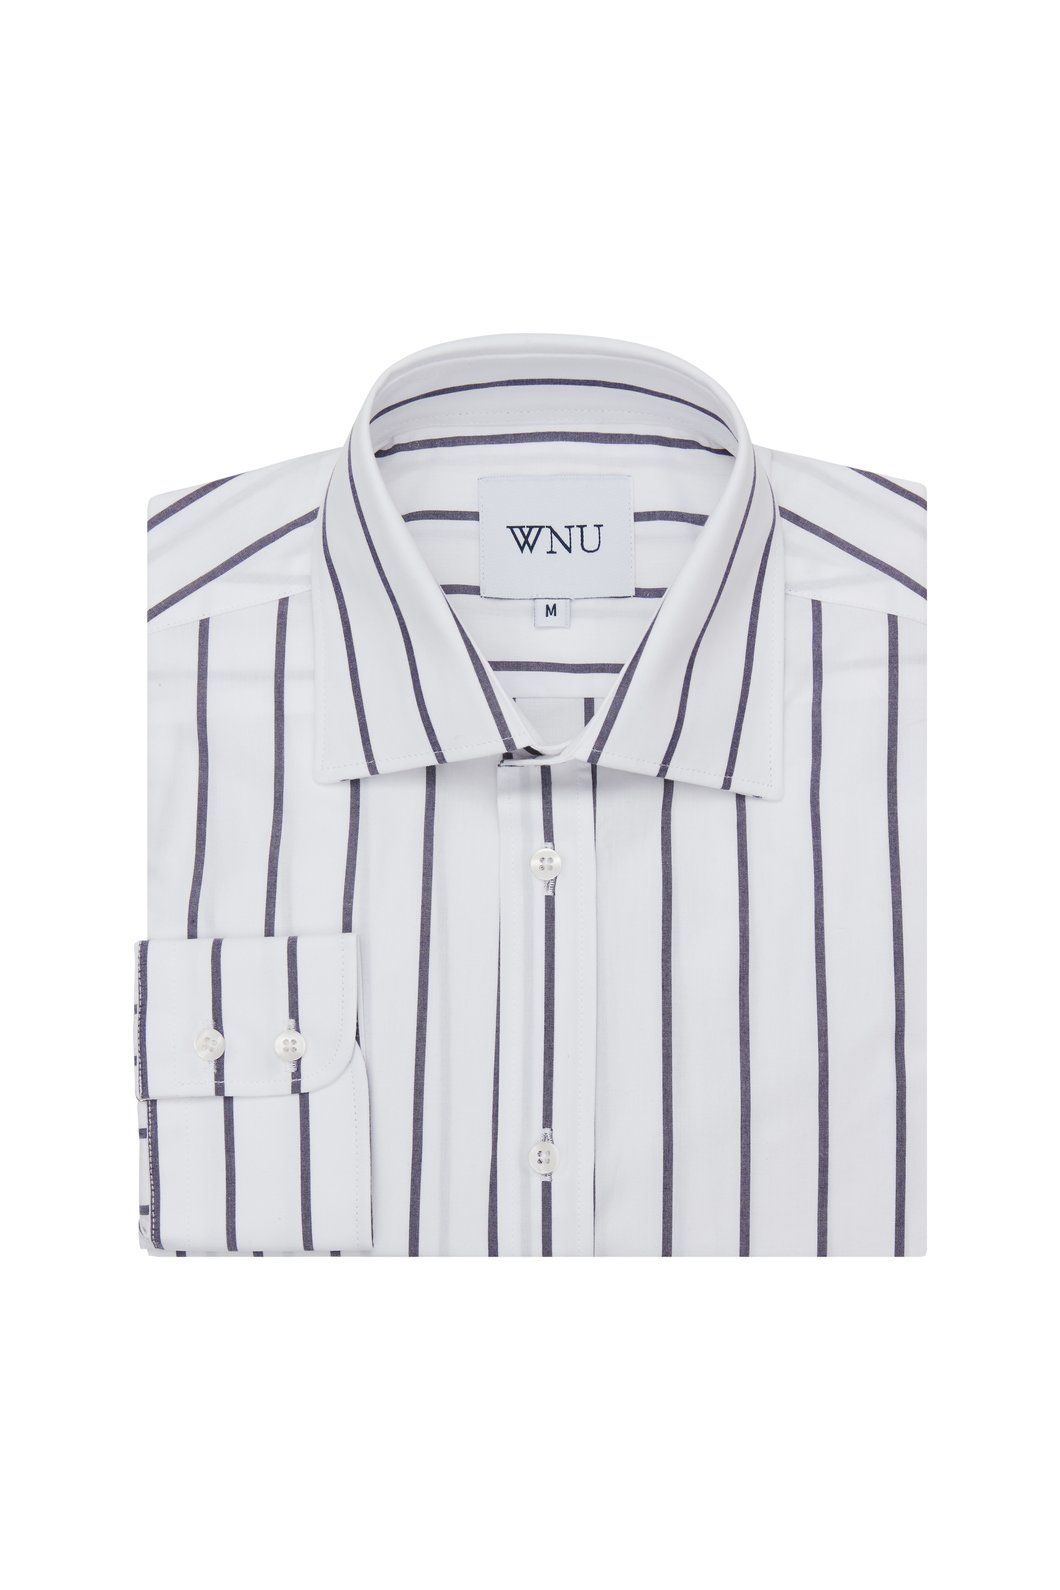 POPLIN: White & Midnight Blue Stripe Shirt